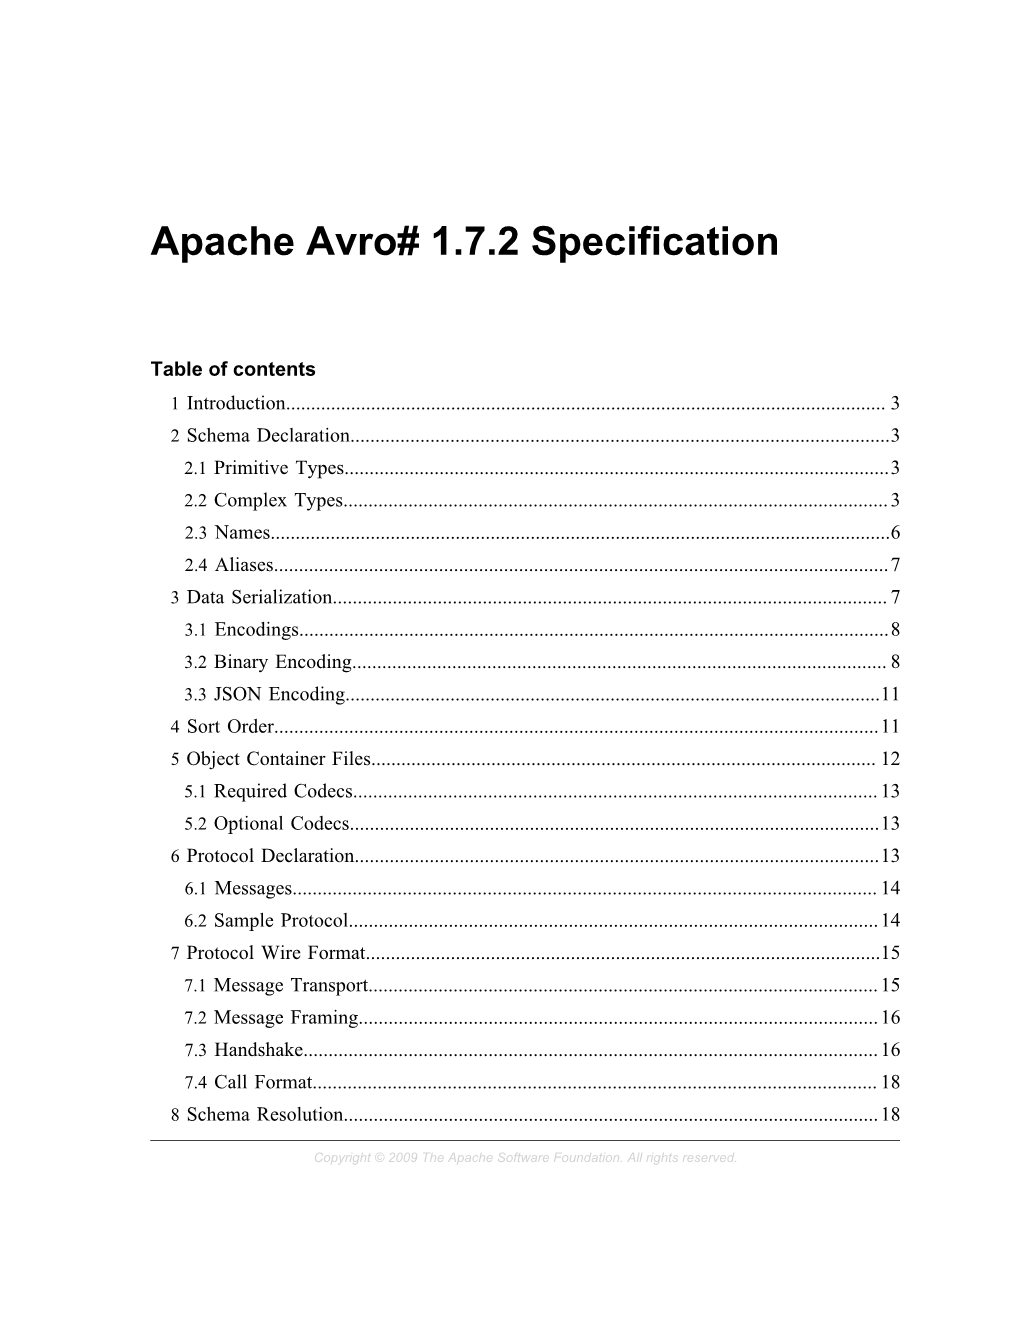 Apache Avro 1.7.2 Specification